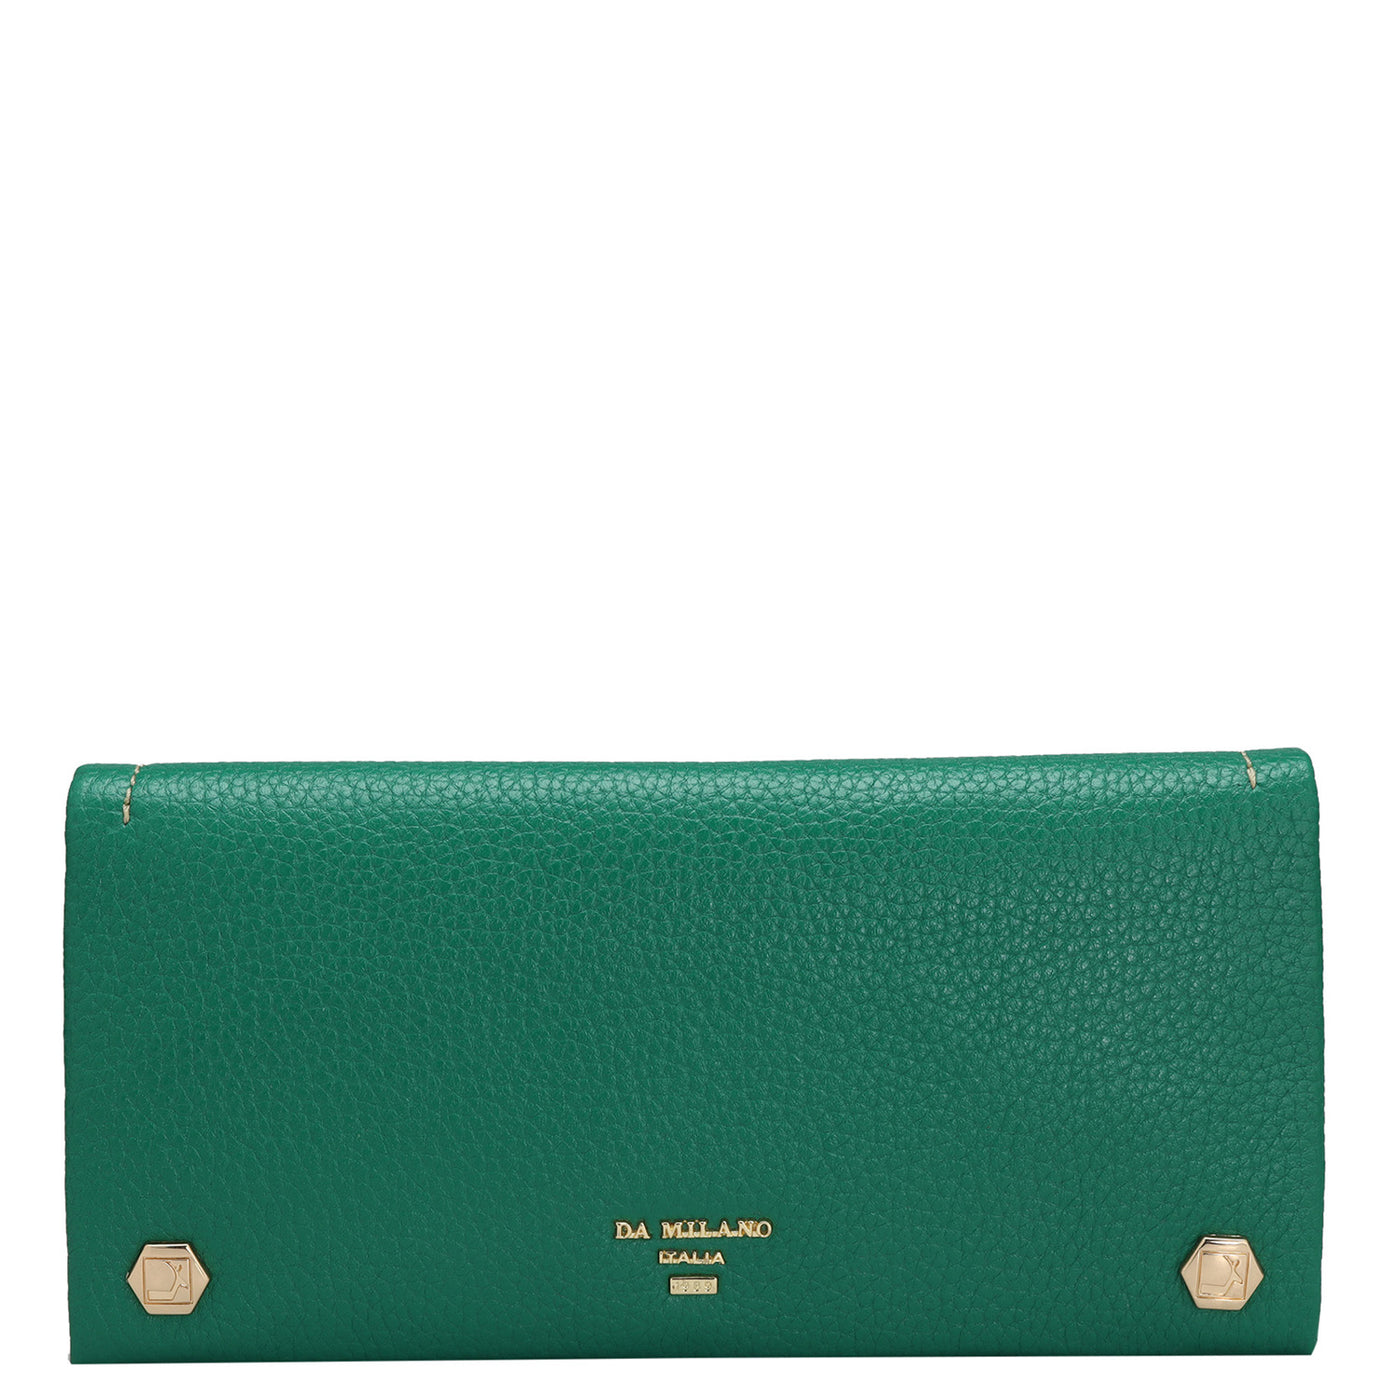 Wax Leather Ladies Wallet - Green